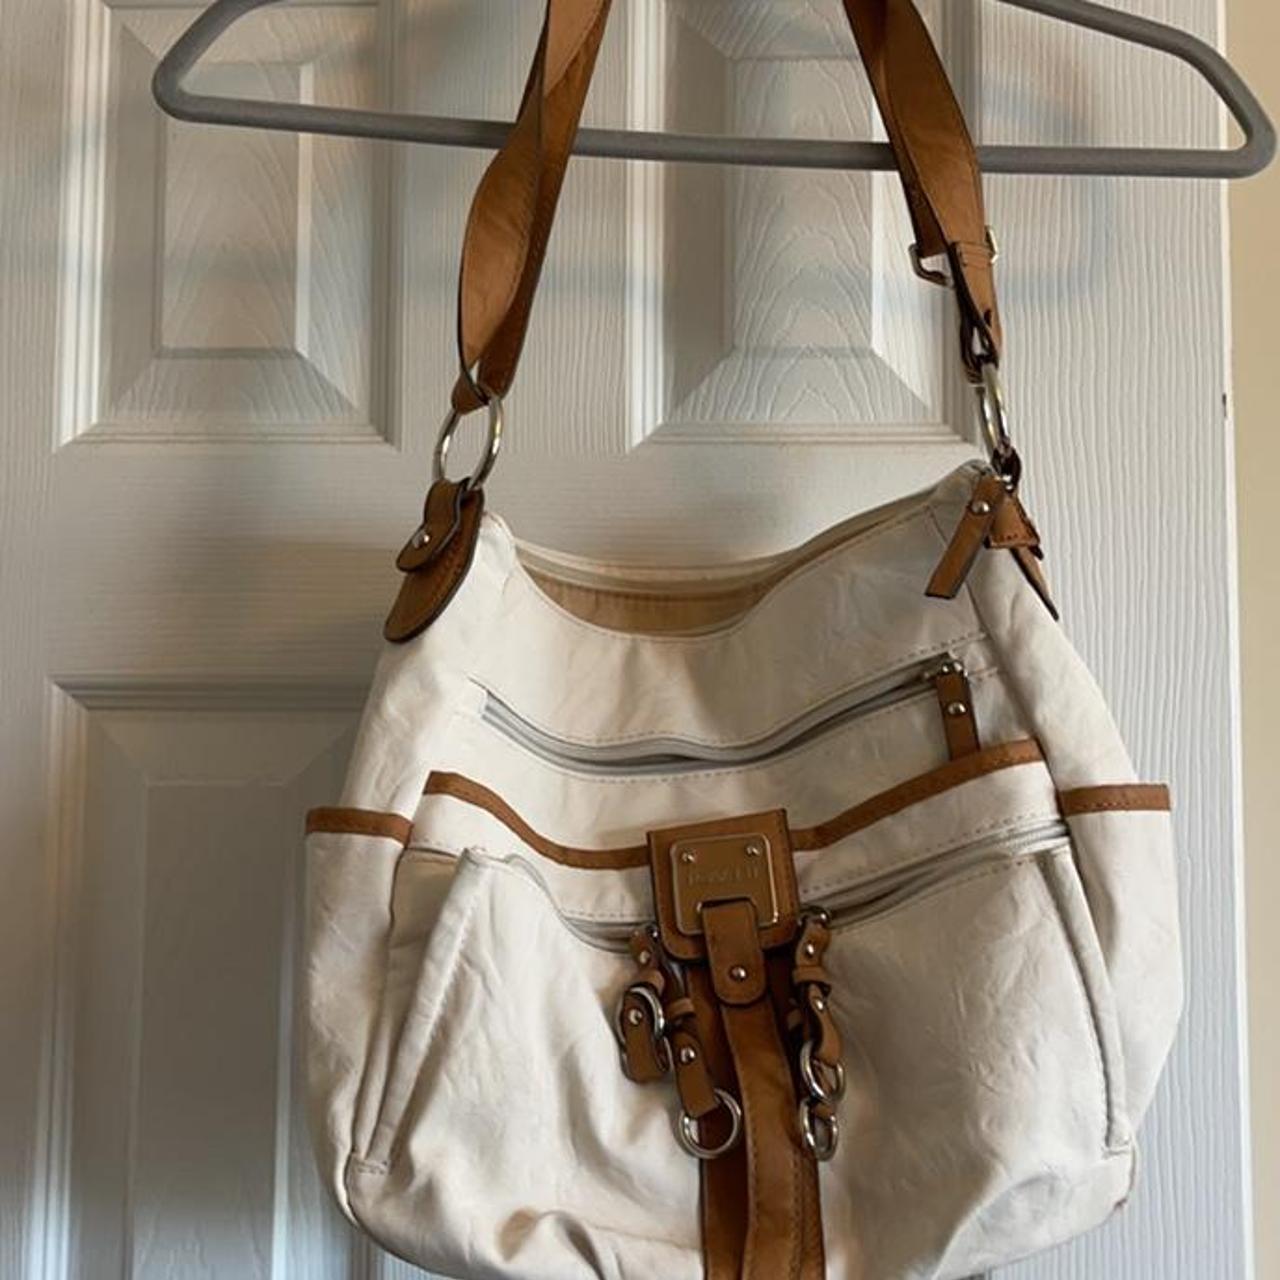 Rosetti Tote Bag Purse Handbag Multi Stripes | eBay